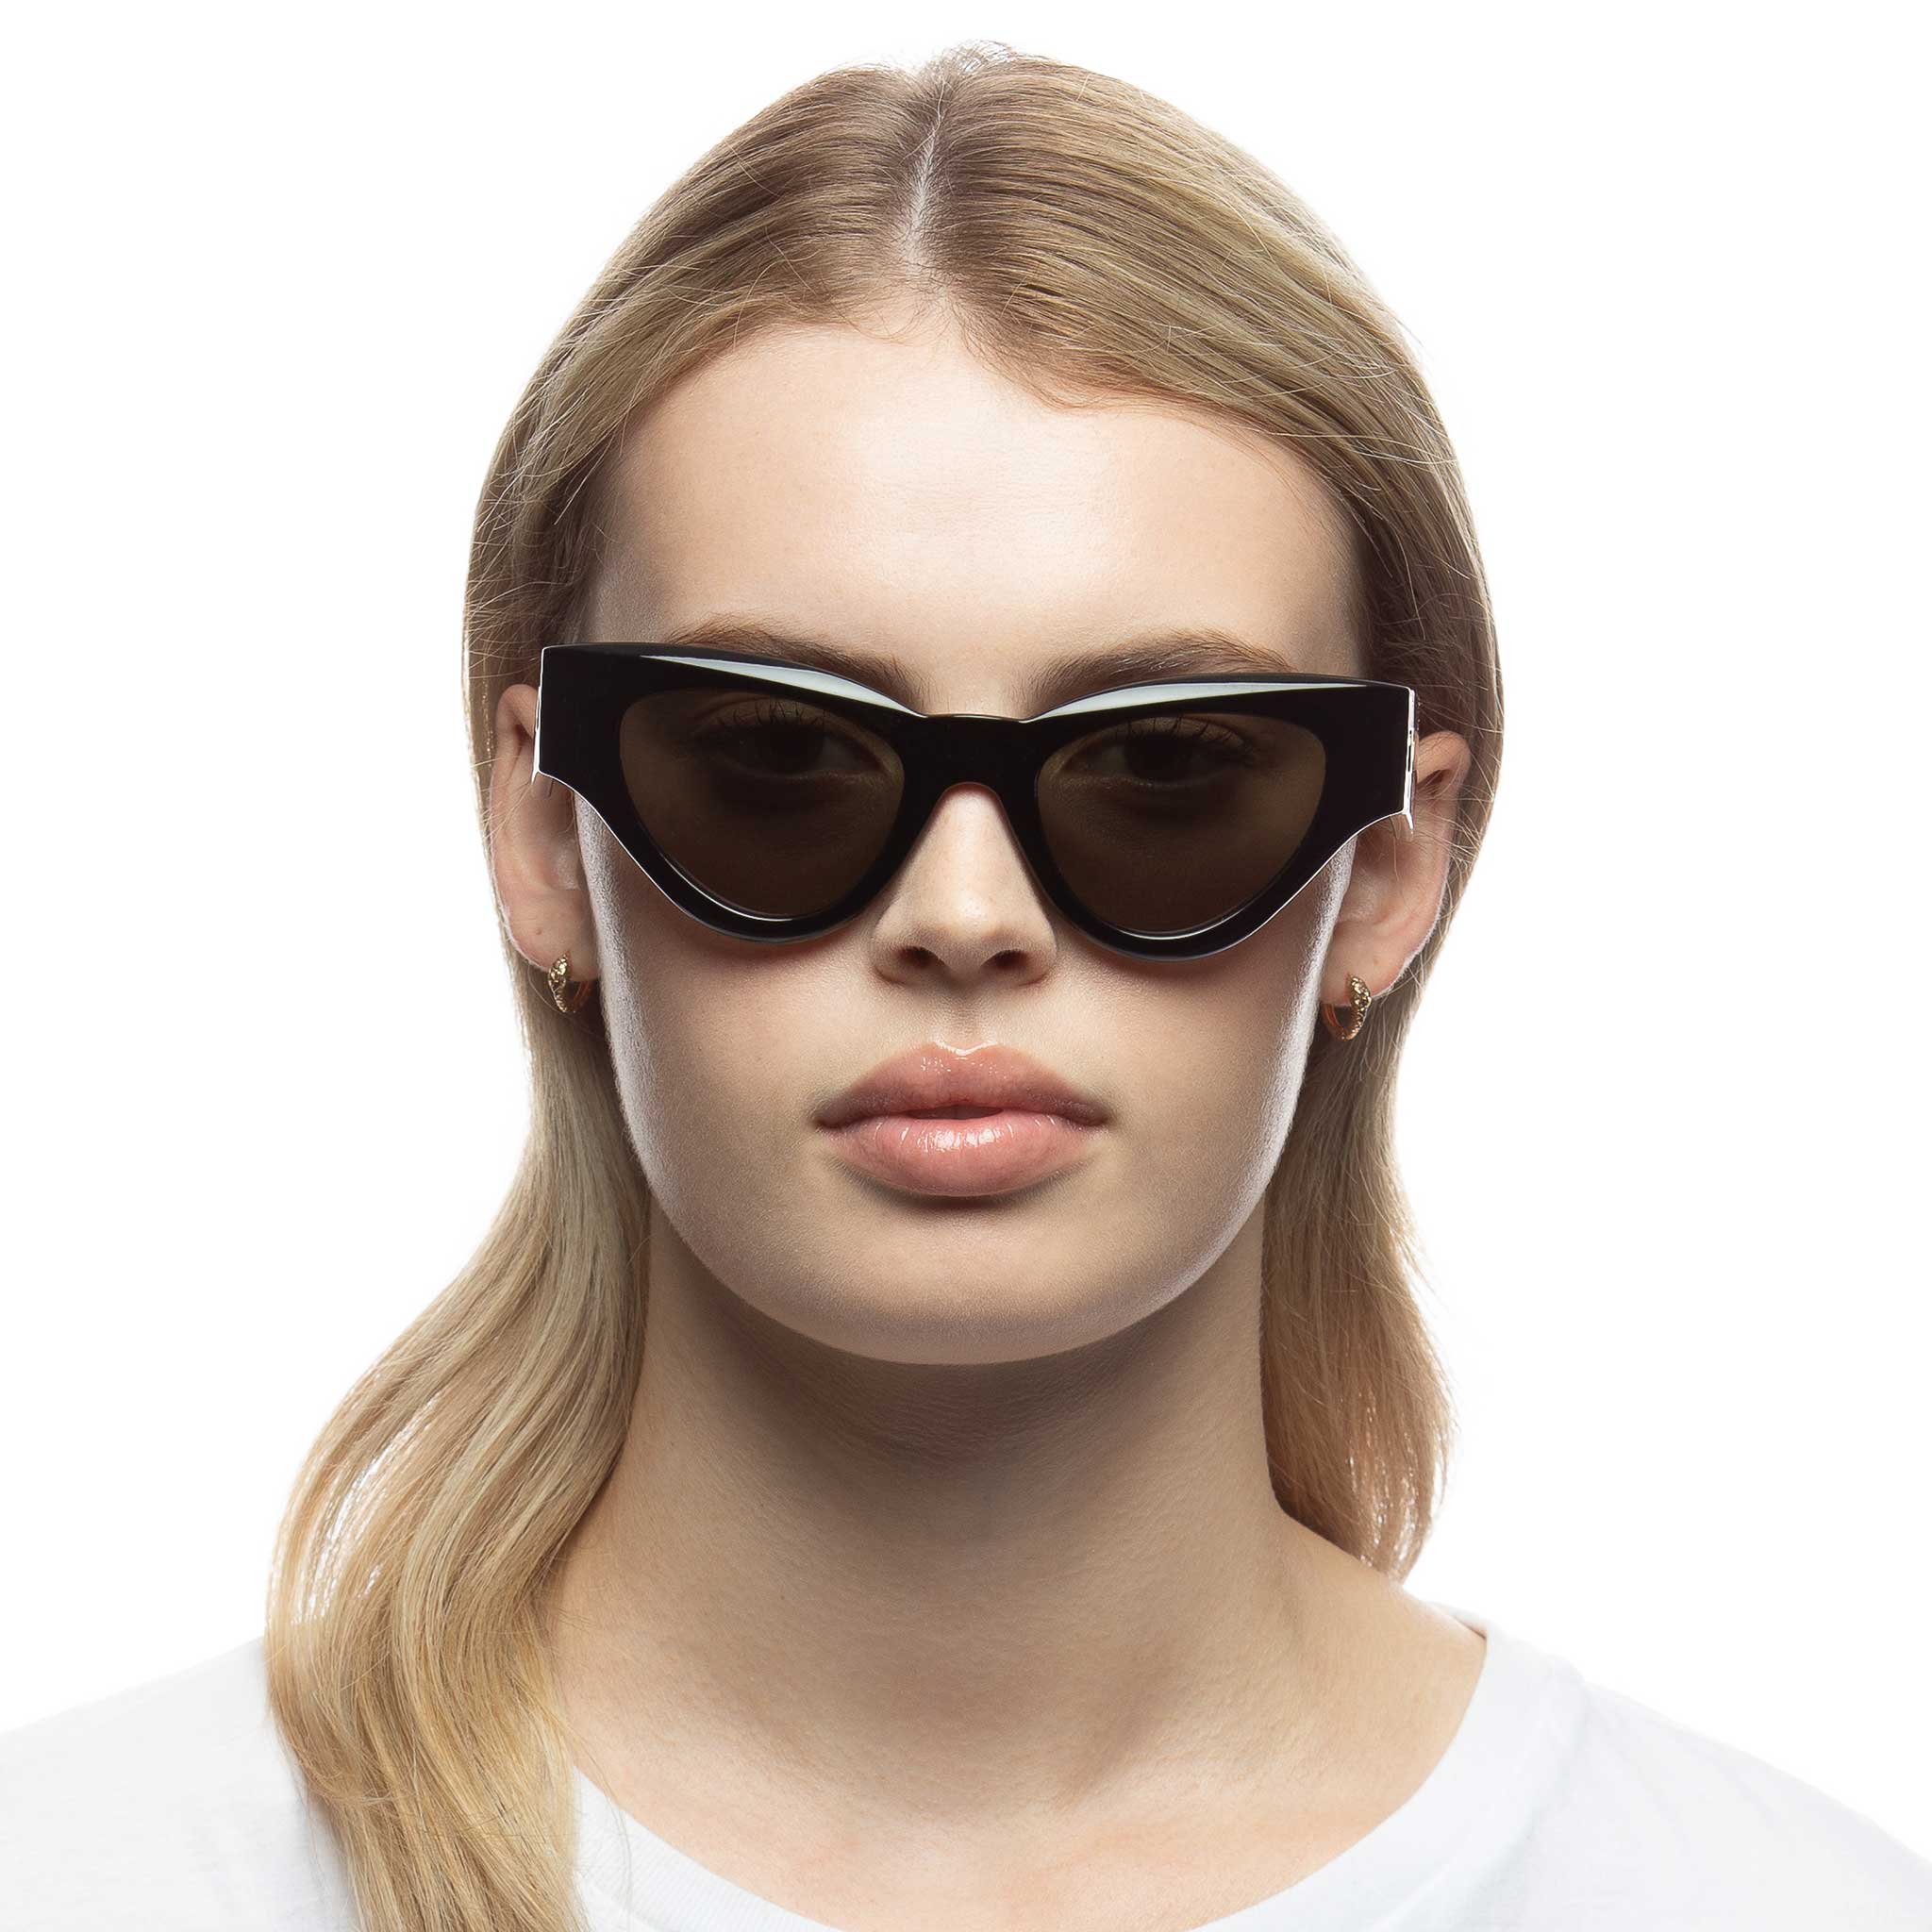 Fanplastico Sunglasses (Black)